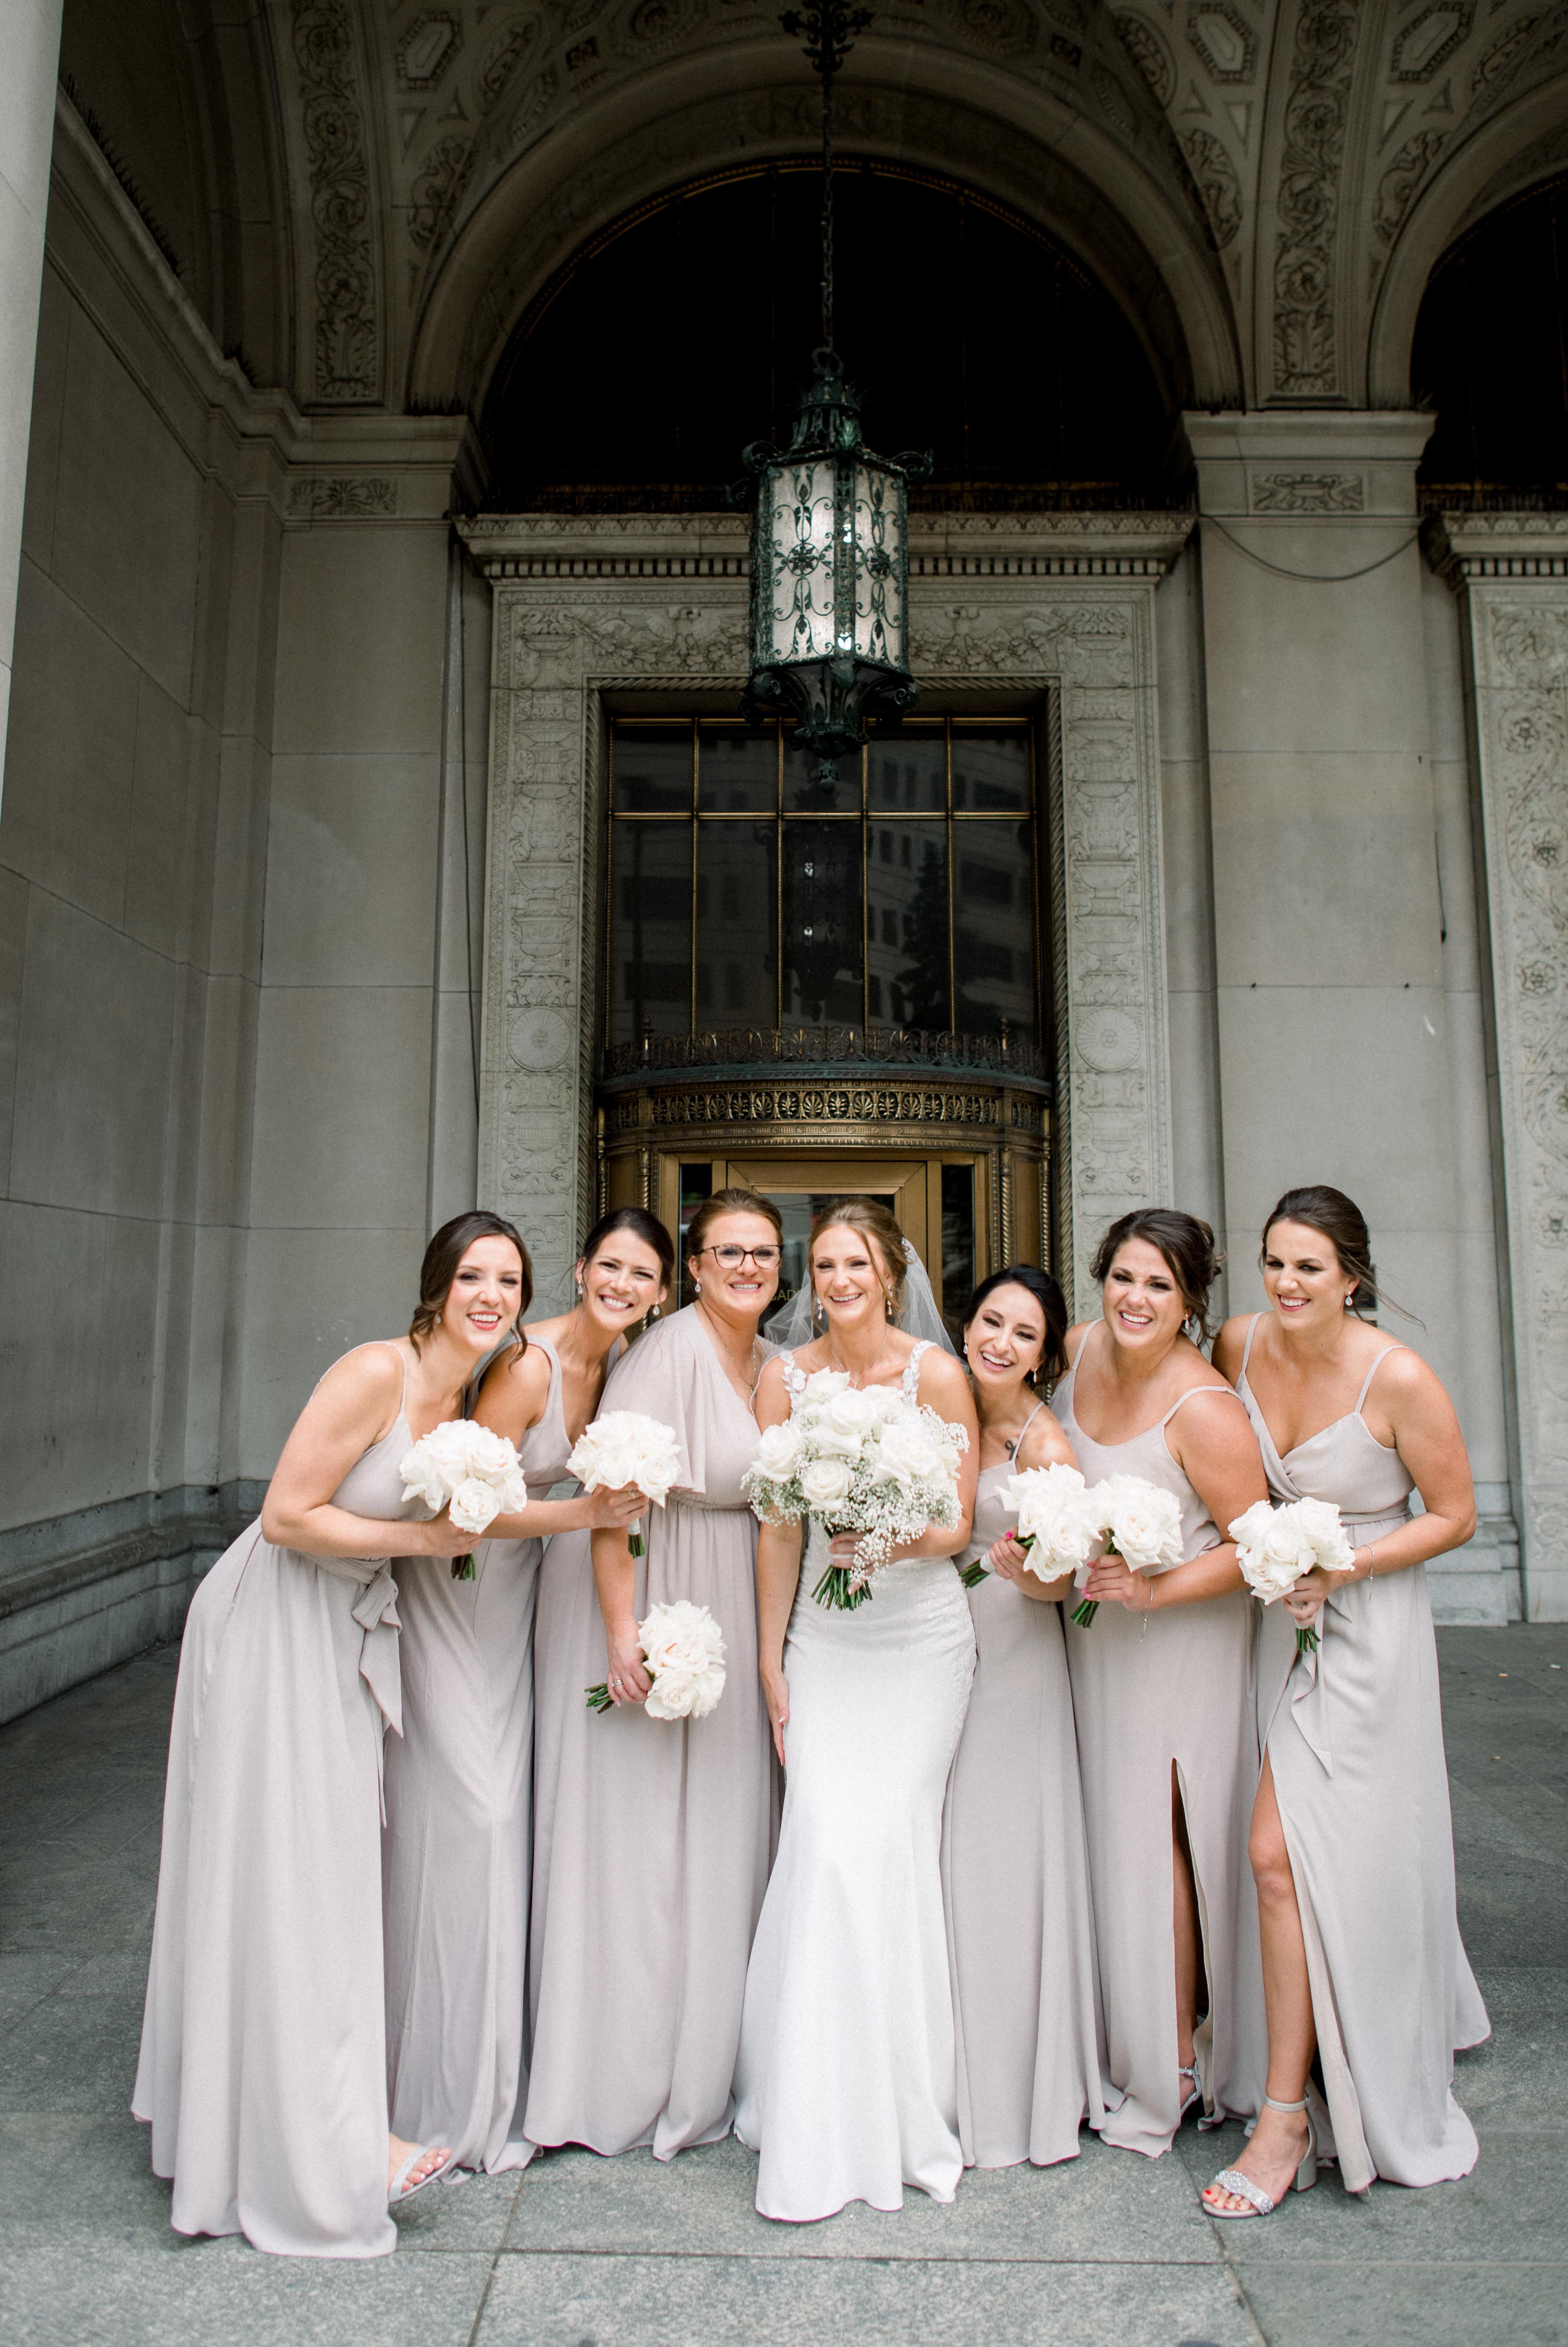 Staley Wedding | Sarah Kossuch Photography